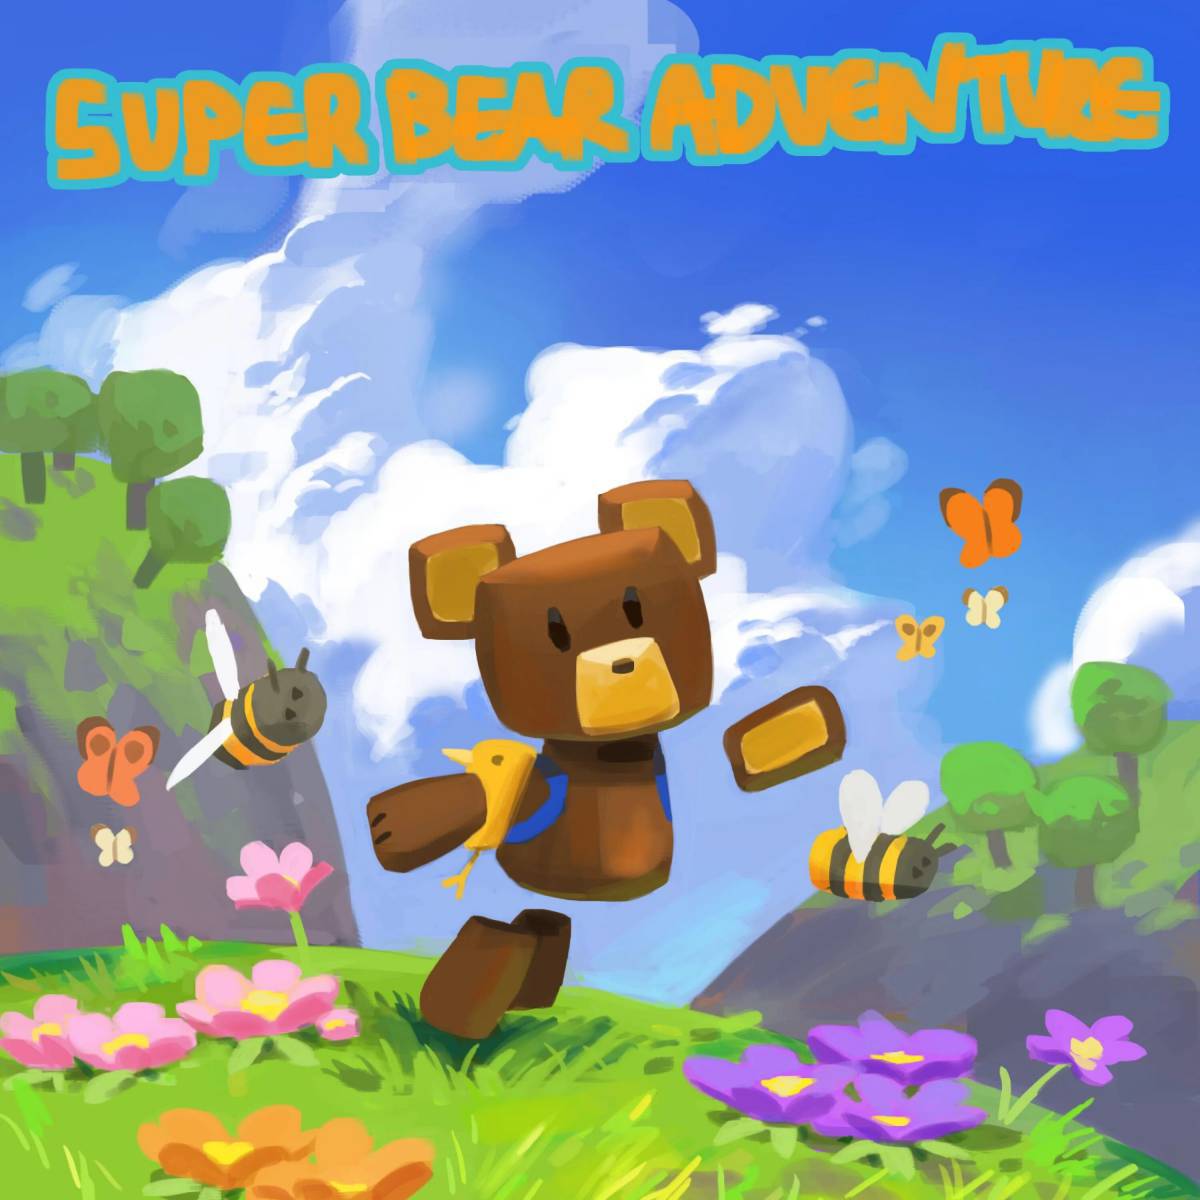 Super bear adventure #1